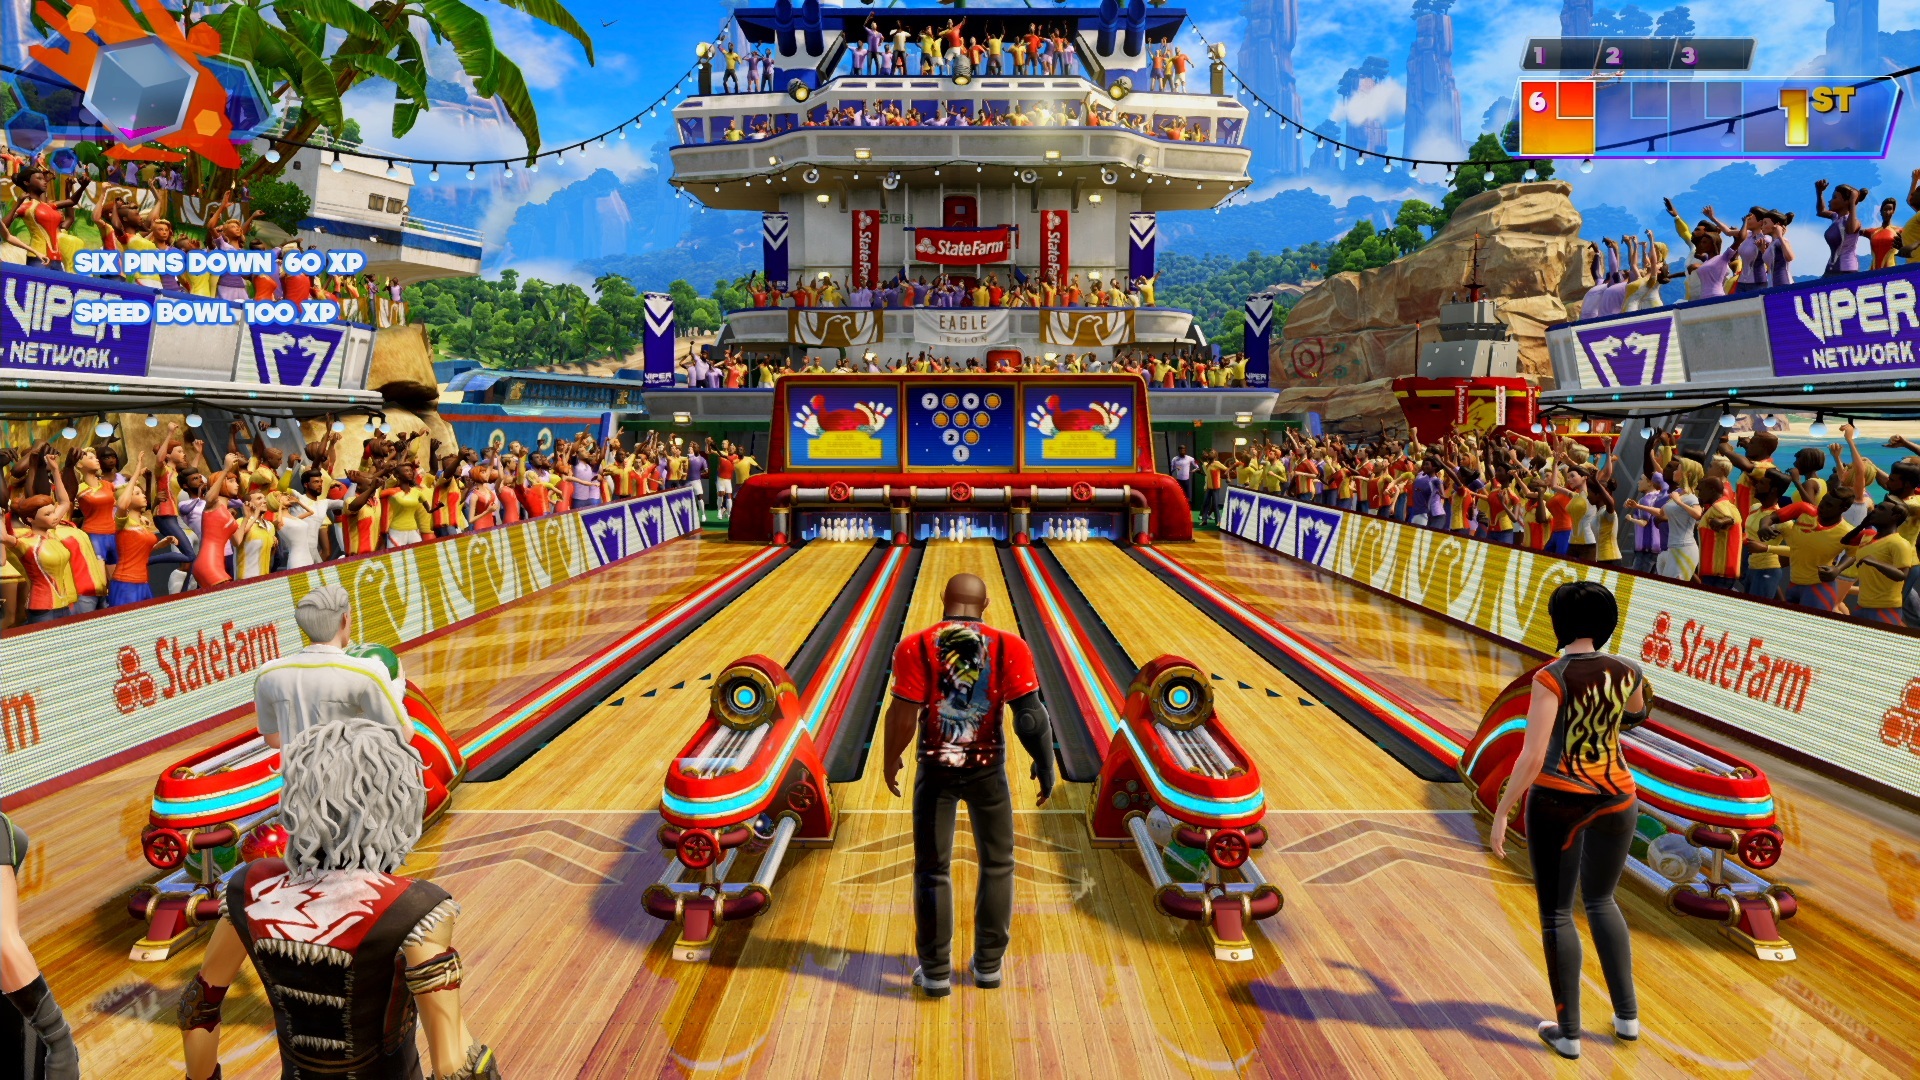 Kinect Sports Rivals Bowling m tl, je vak rovnak ako predtm,  len s lepej grafike